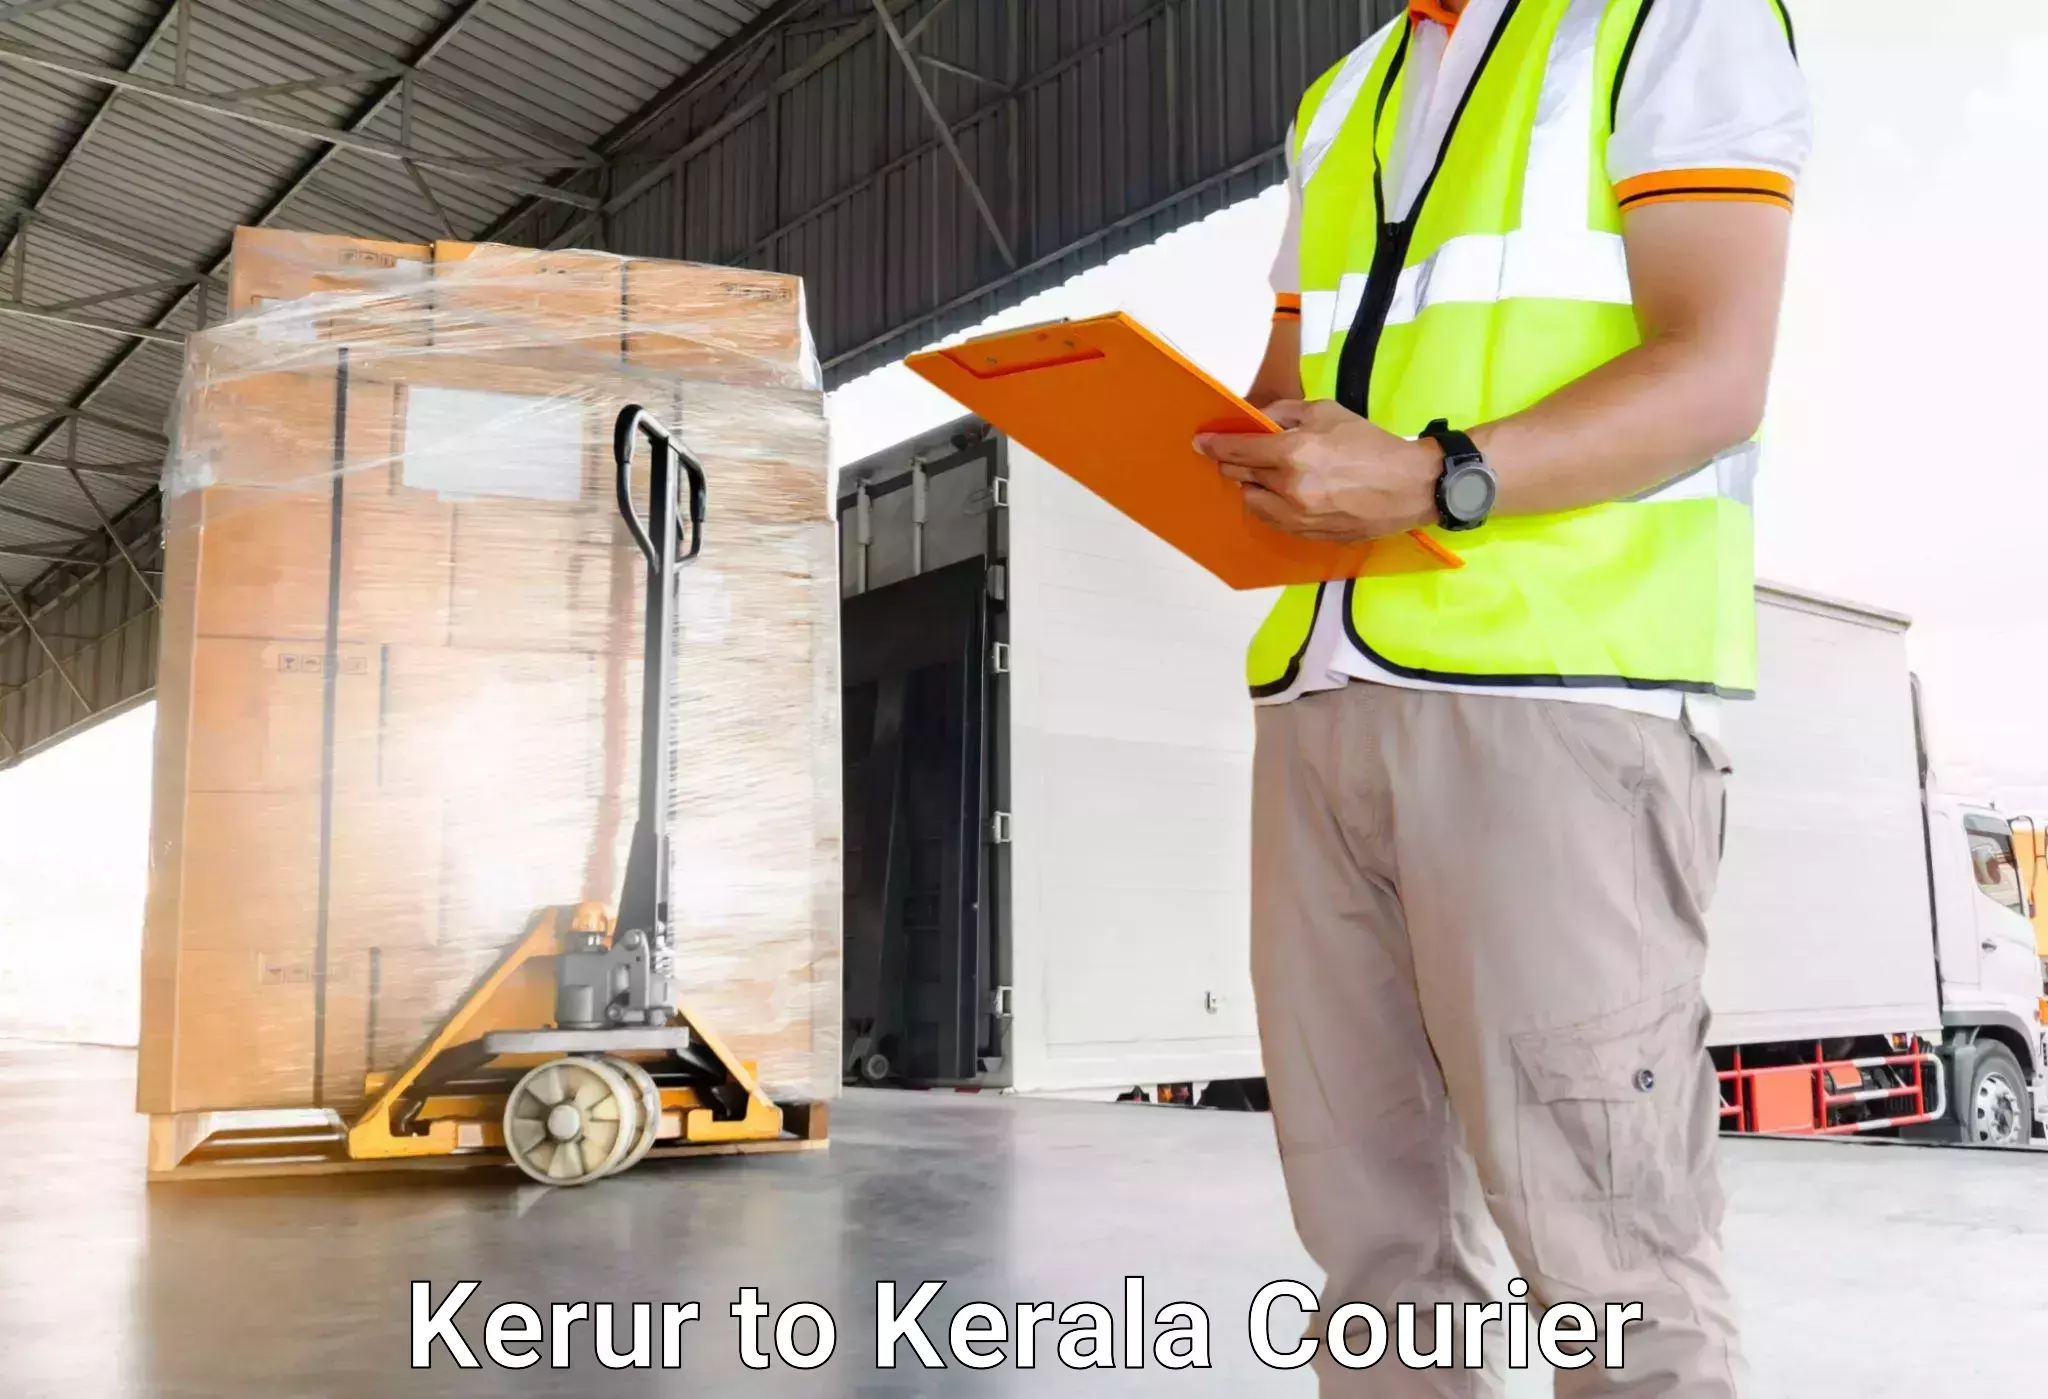 Doorstep luggage collection Kerur to Cochin Port Kochi